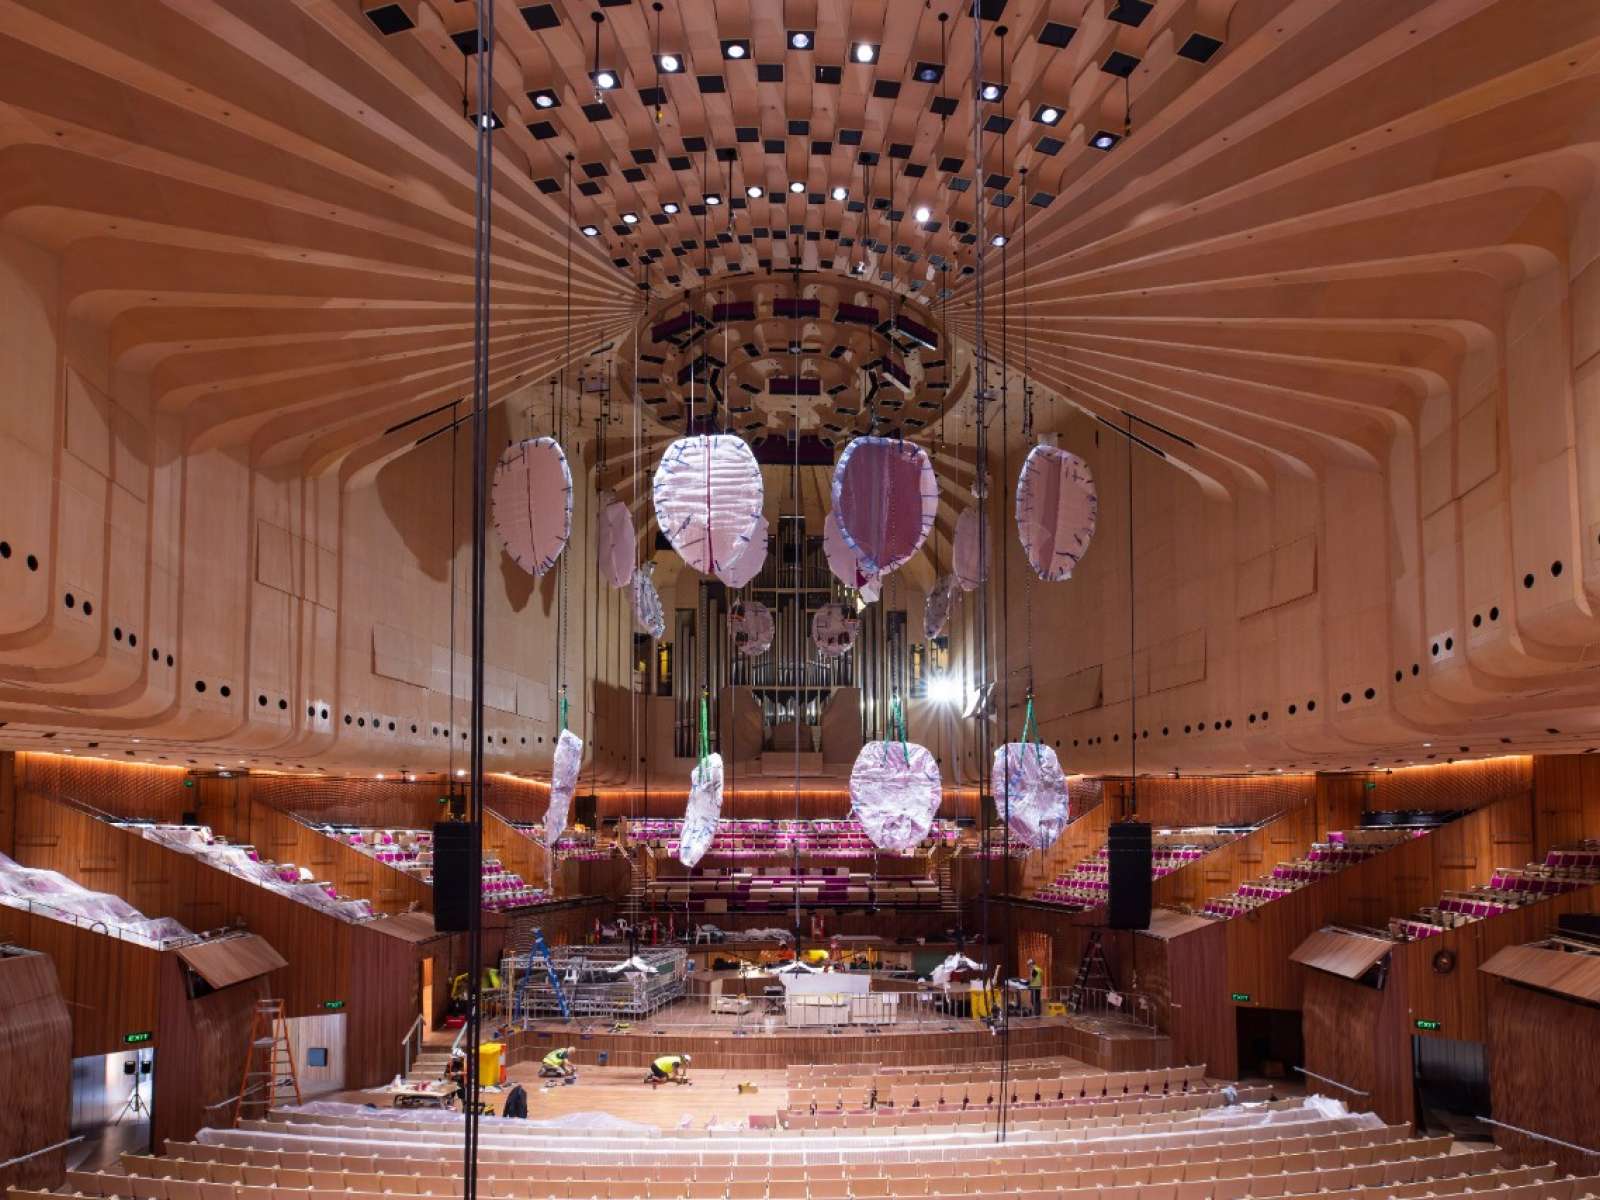 Celebrating a Milestone Sydney Opera House Reopens / ARM Architecture